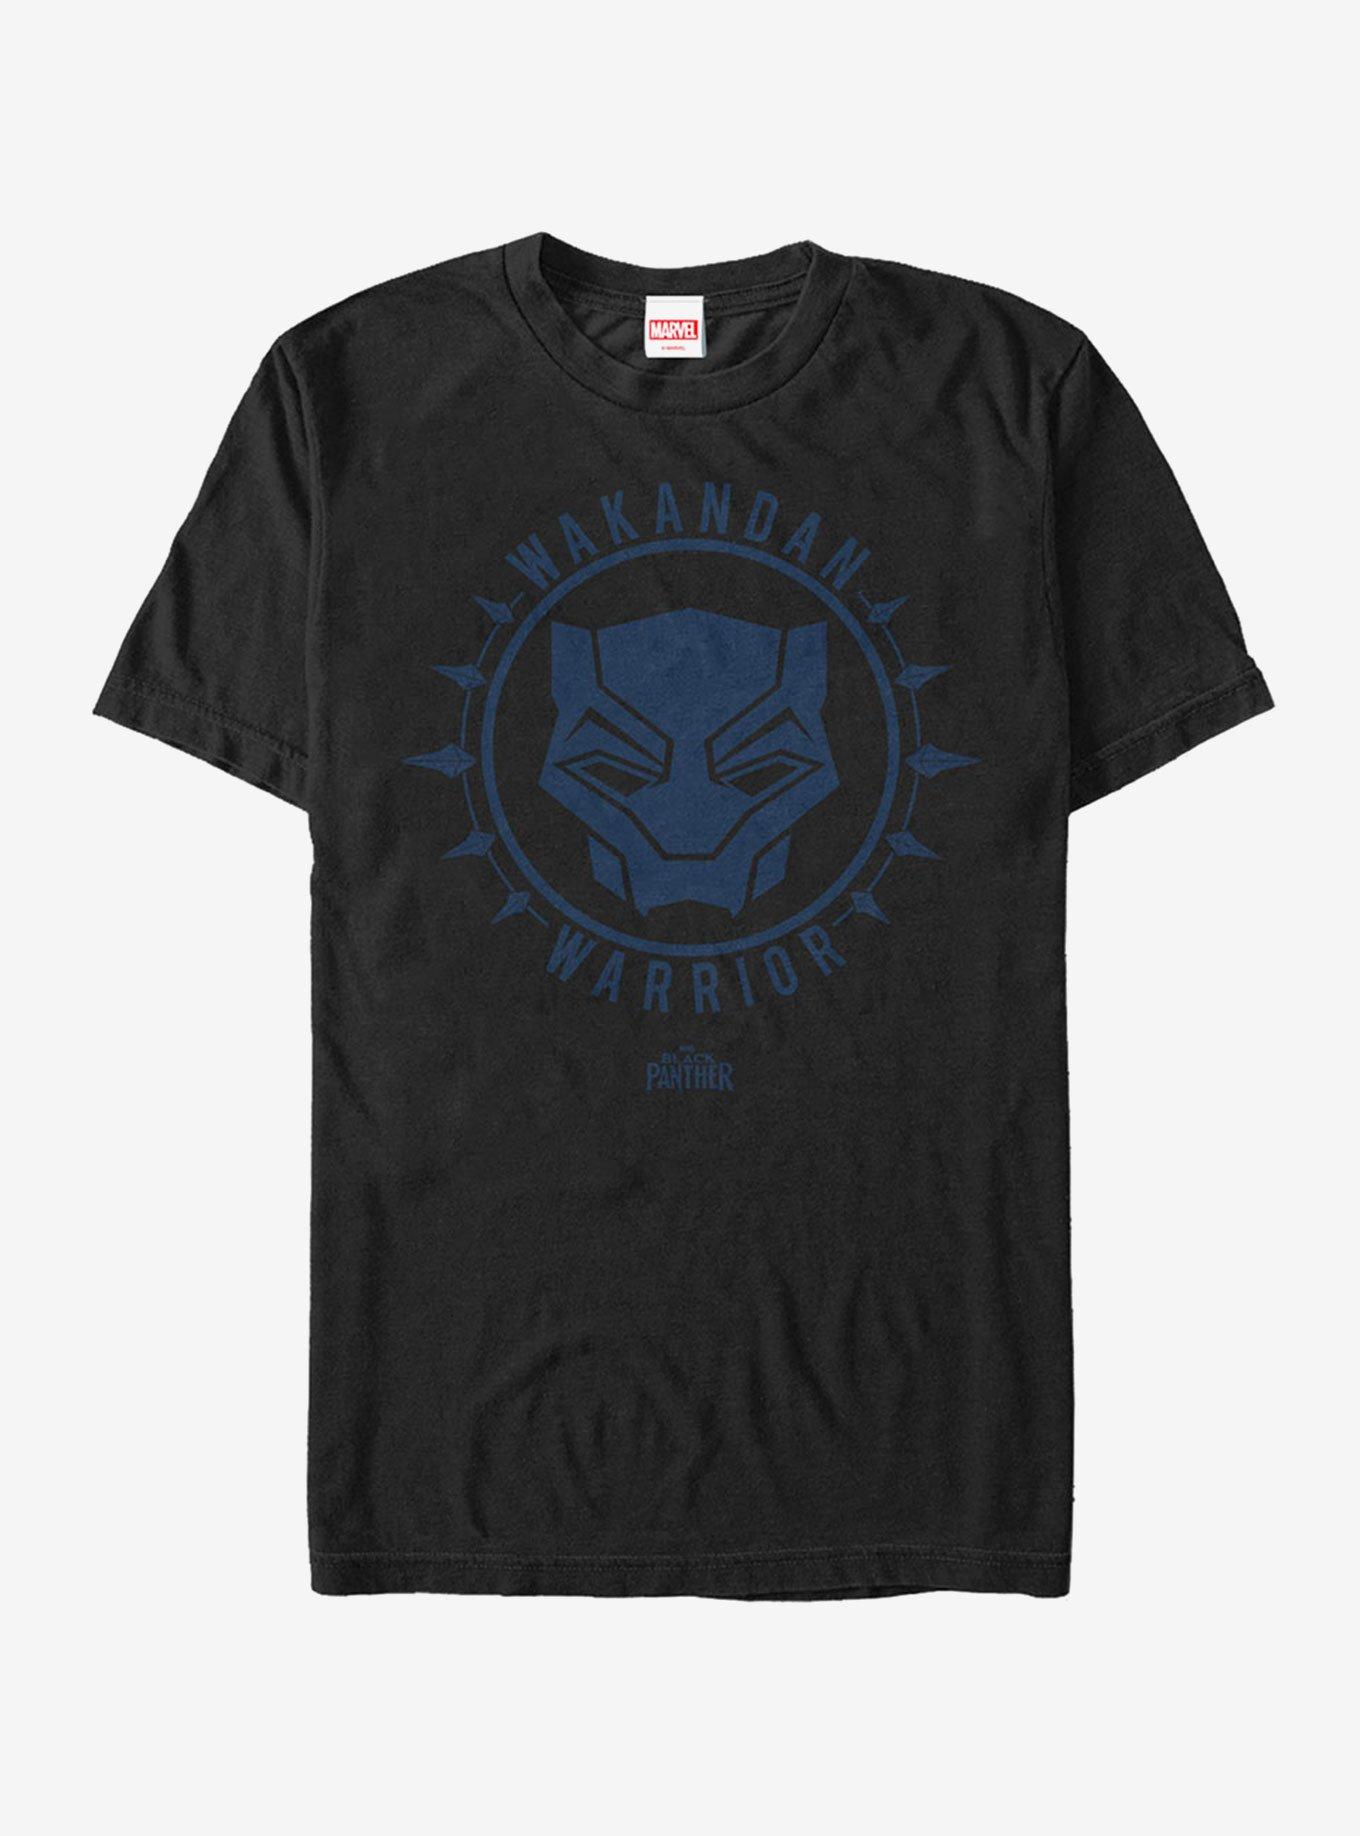 Marvel Black Panther 2018 Wakanda Night Mask T-Shirt, BLACK, hi-res